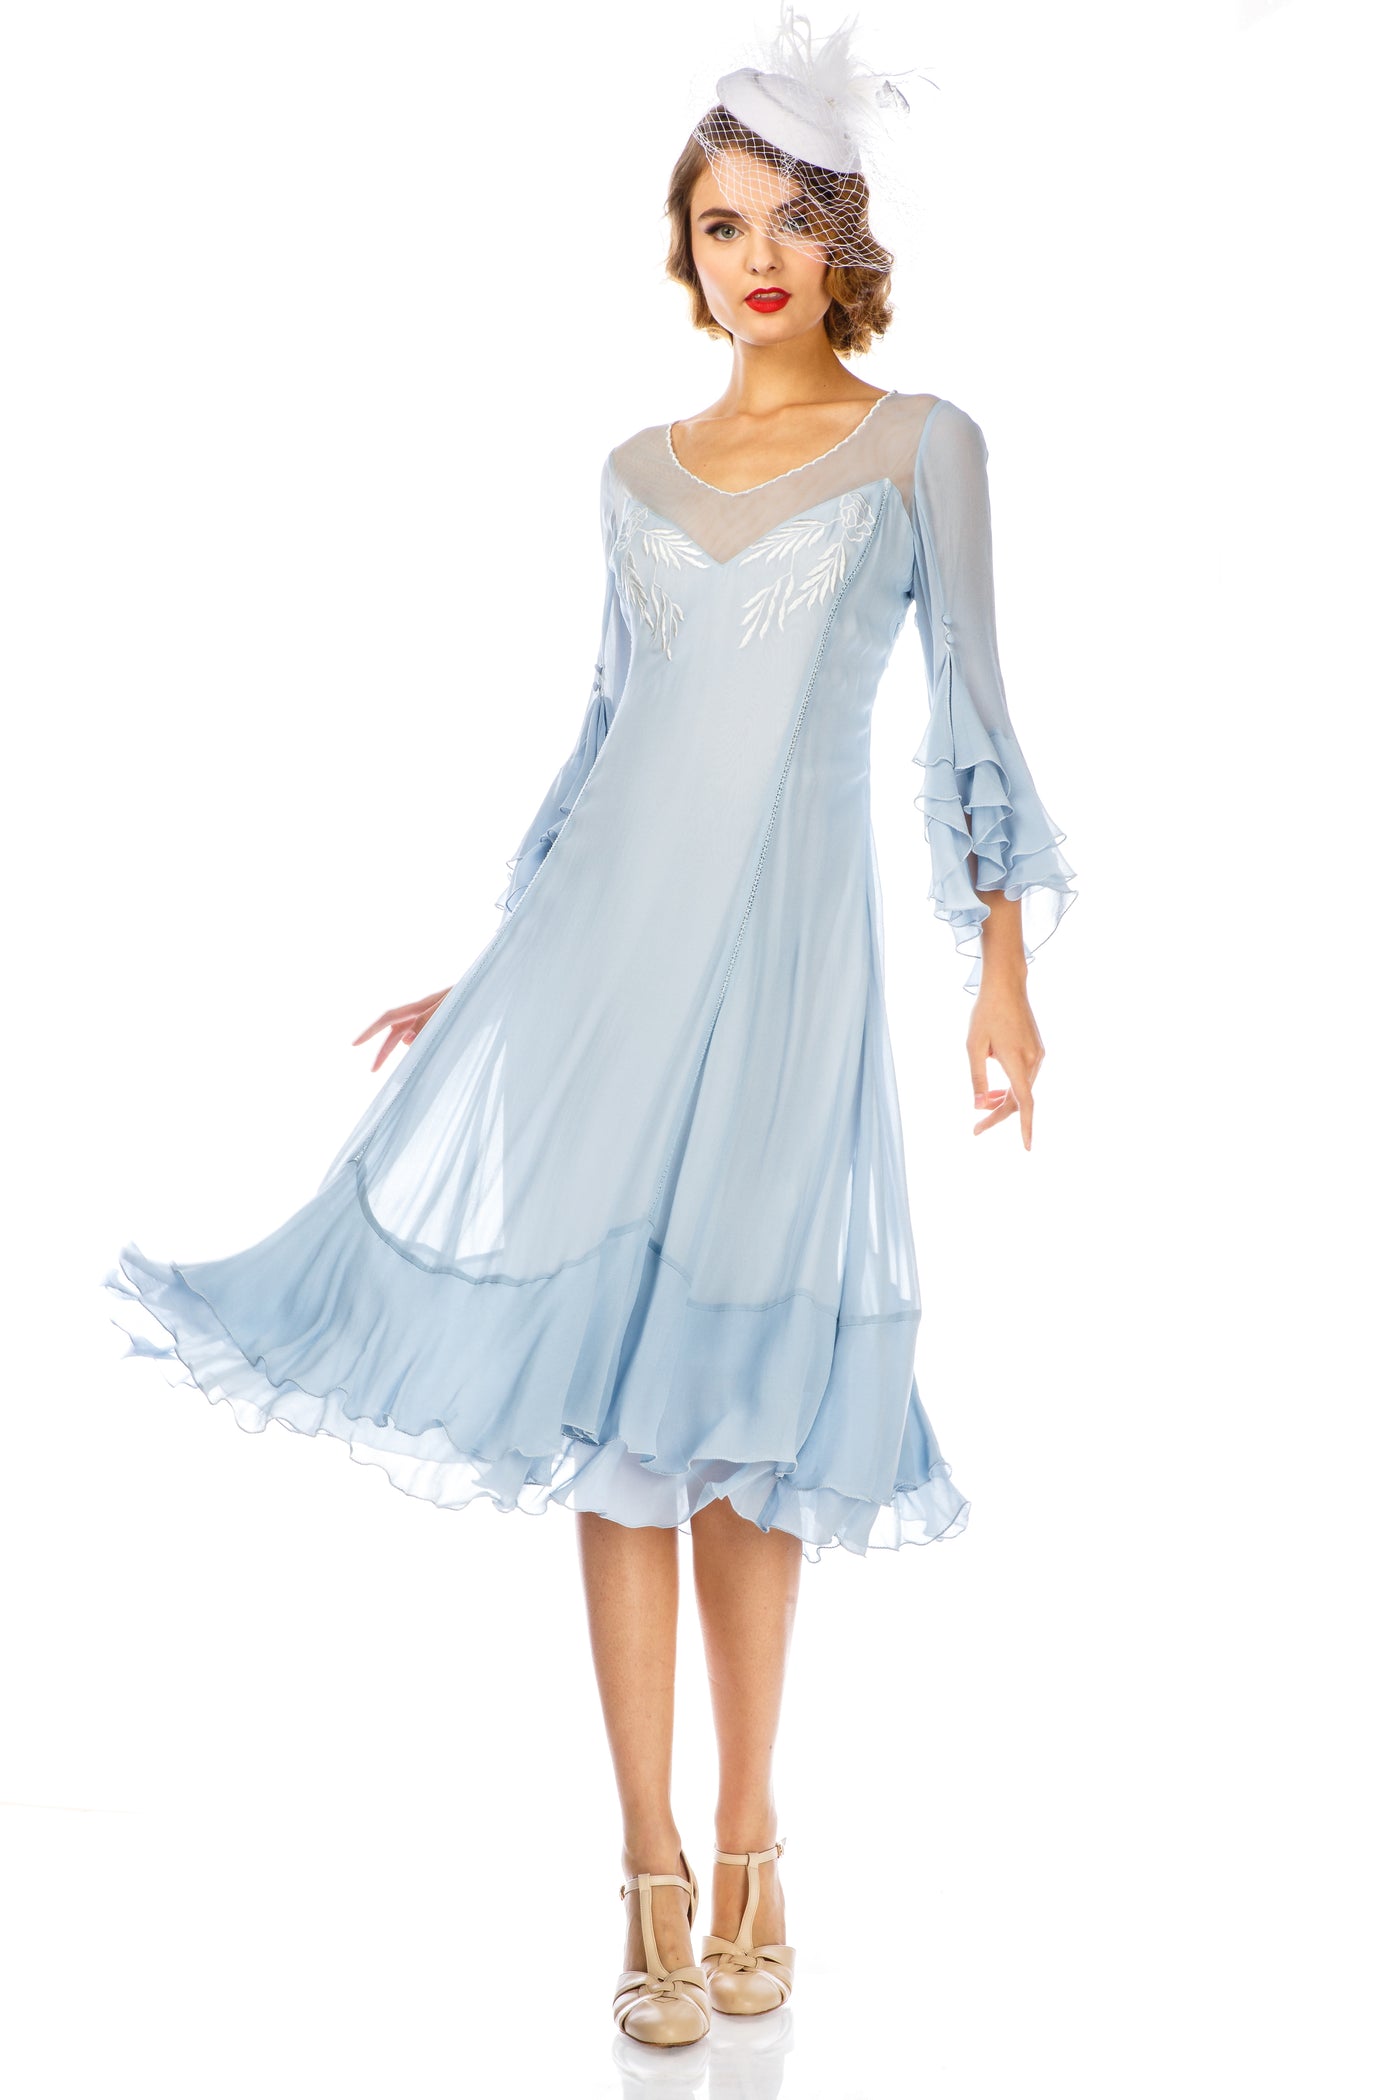 Vintage Inspired Sky Blue Dress by Nataya – WardrobeShop